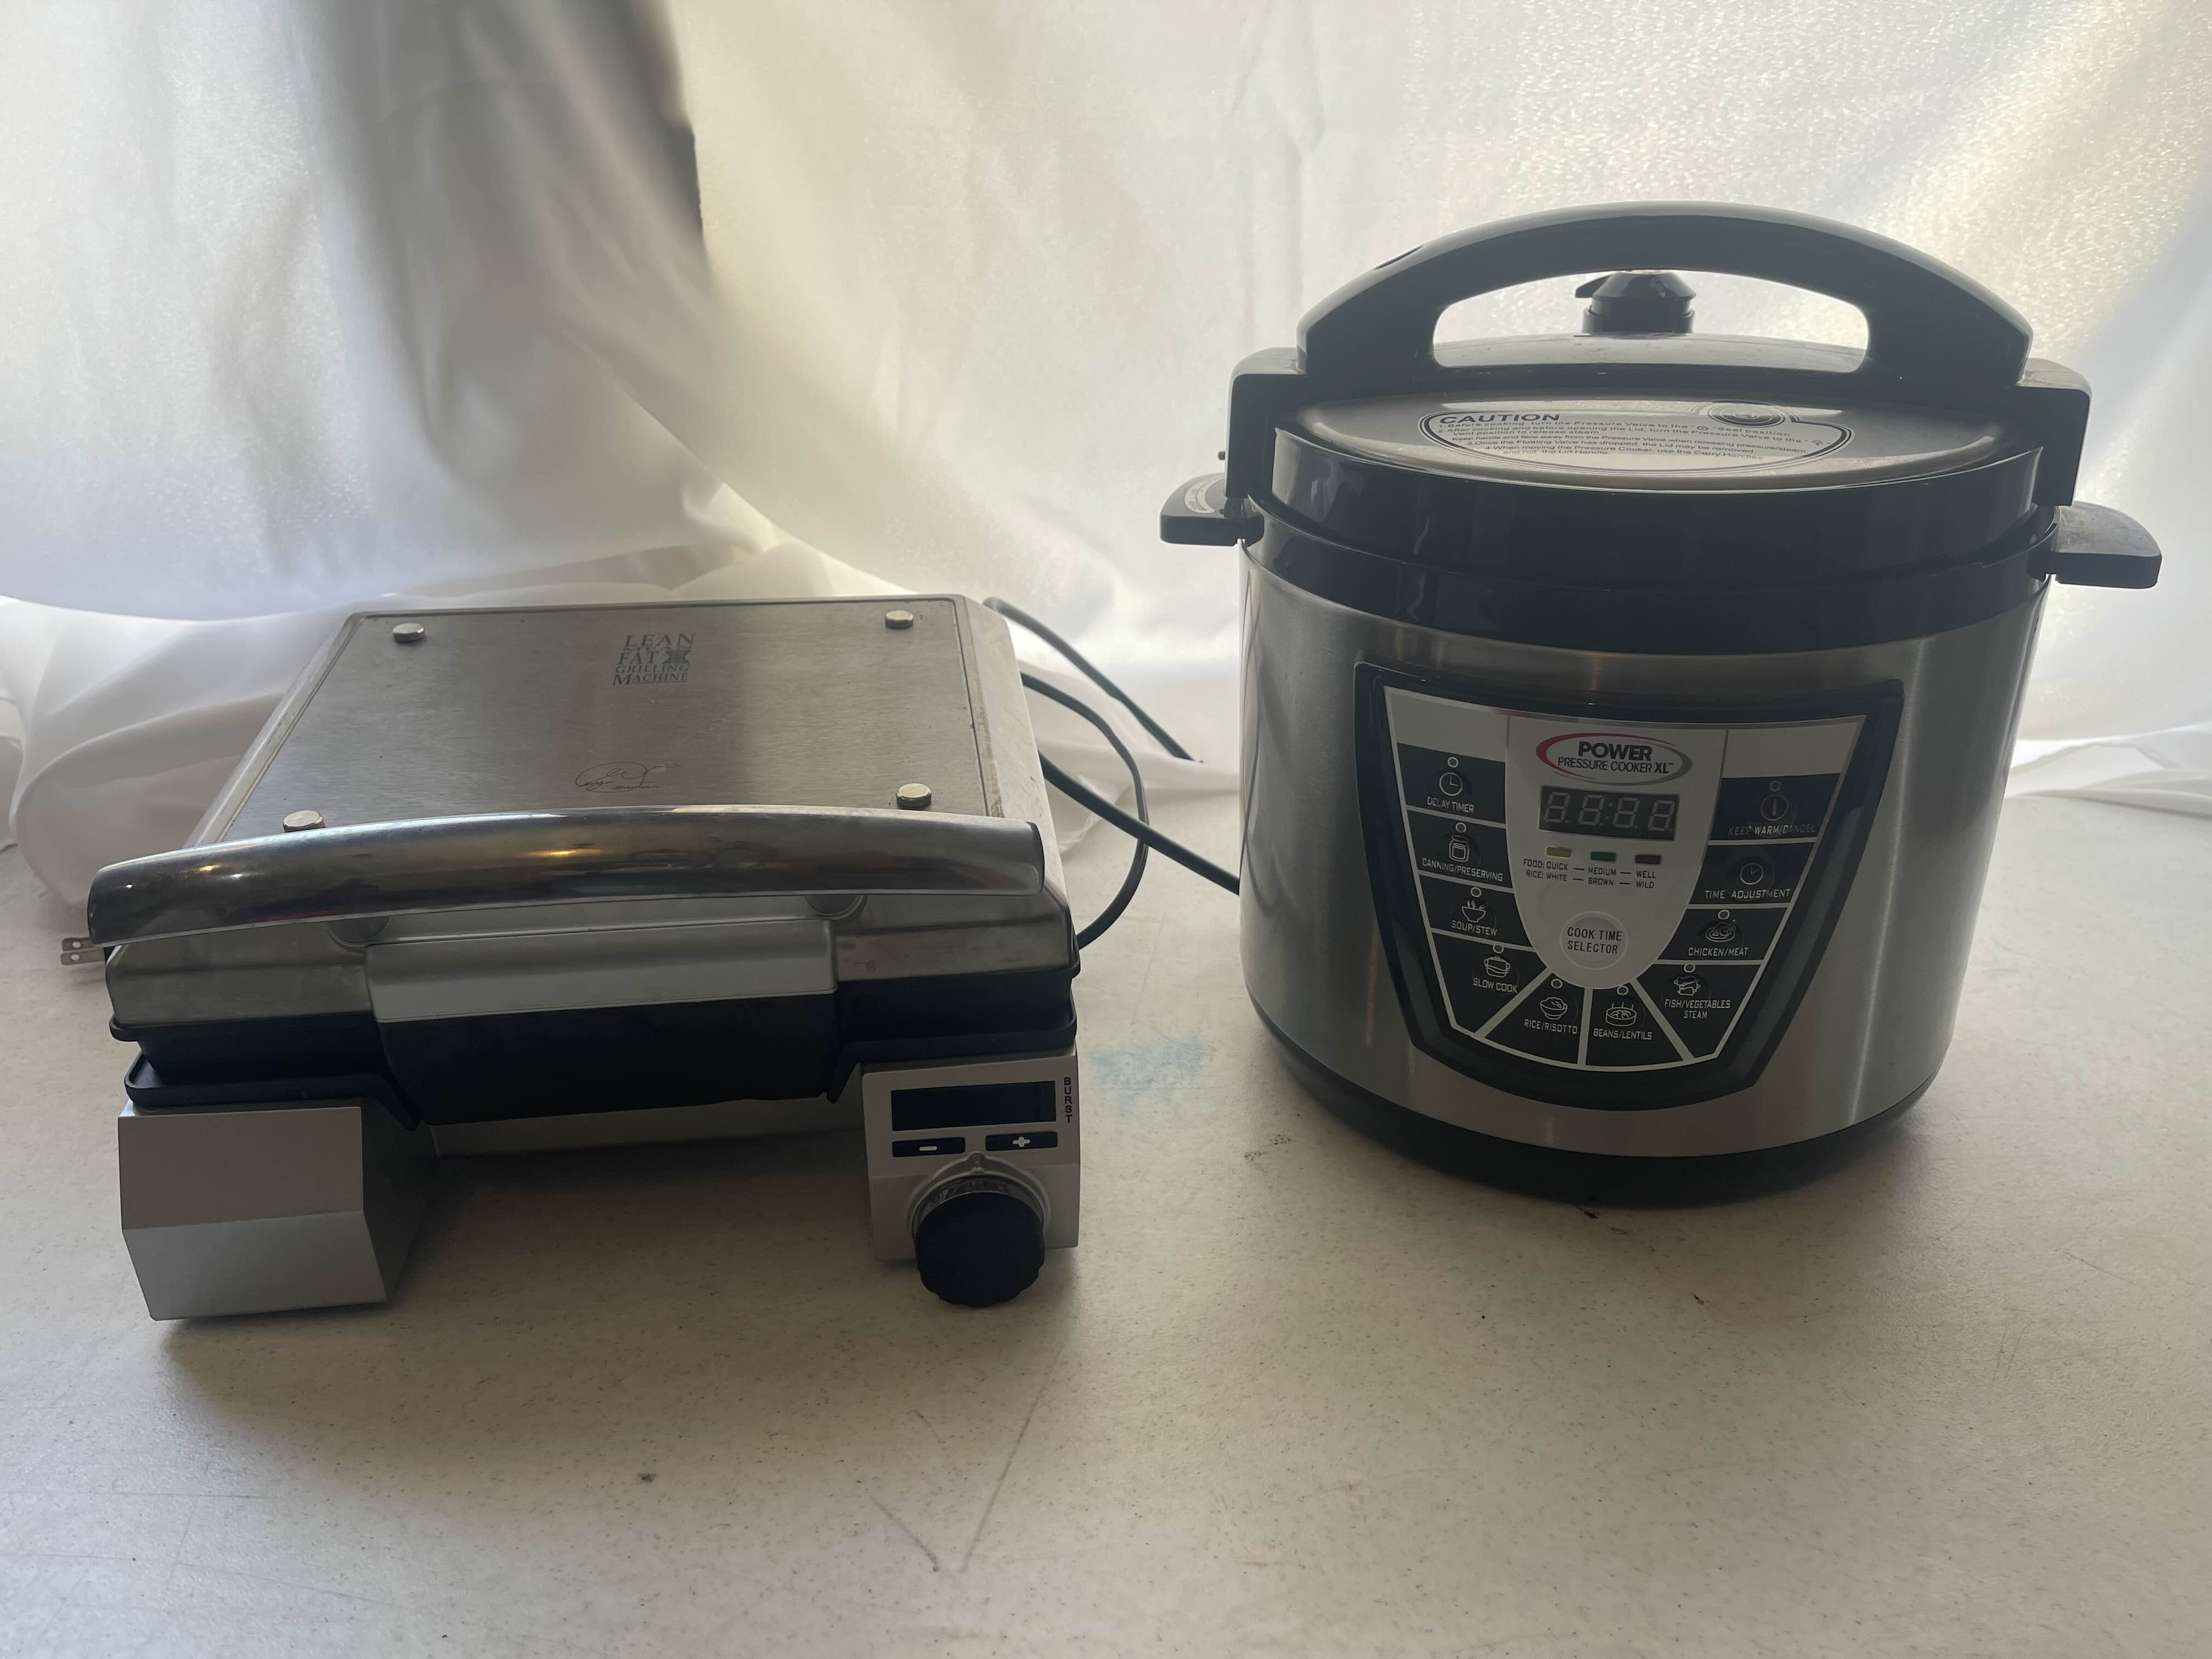  Power Pressure Cooker Xl 10 Quart